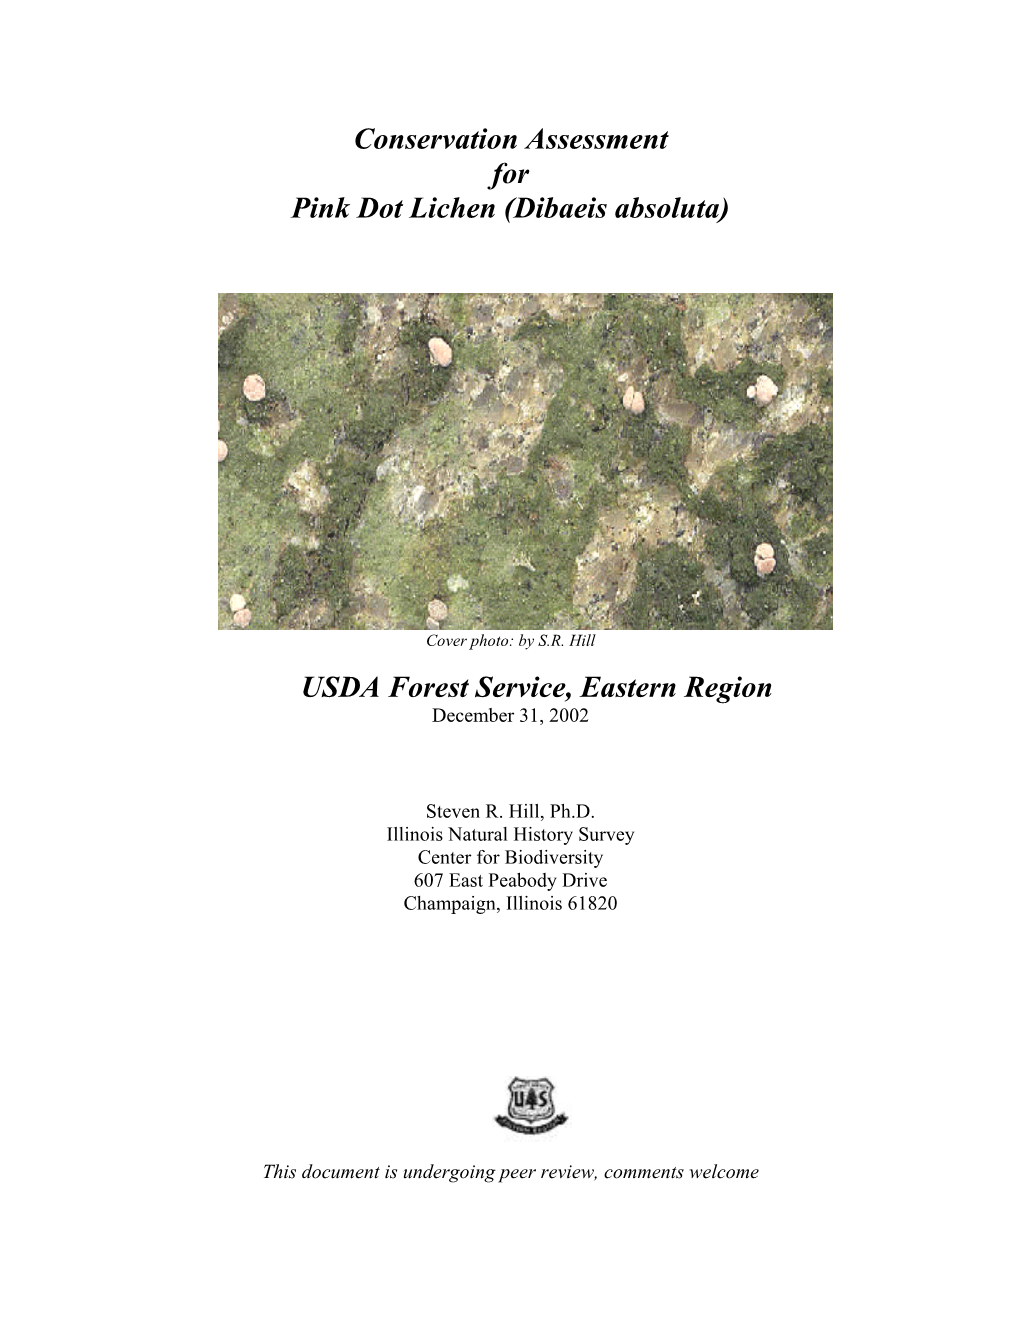 Conservation Assessment for Pink Dot Lichen (Dibaeis Absoluta) USDA